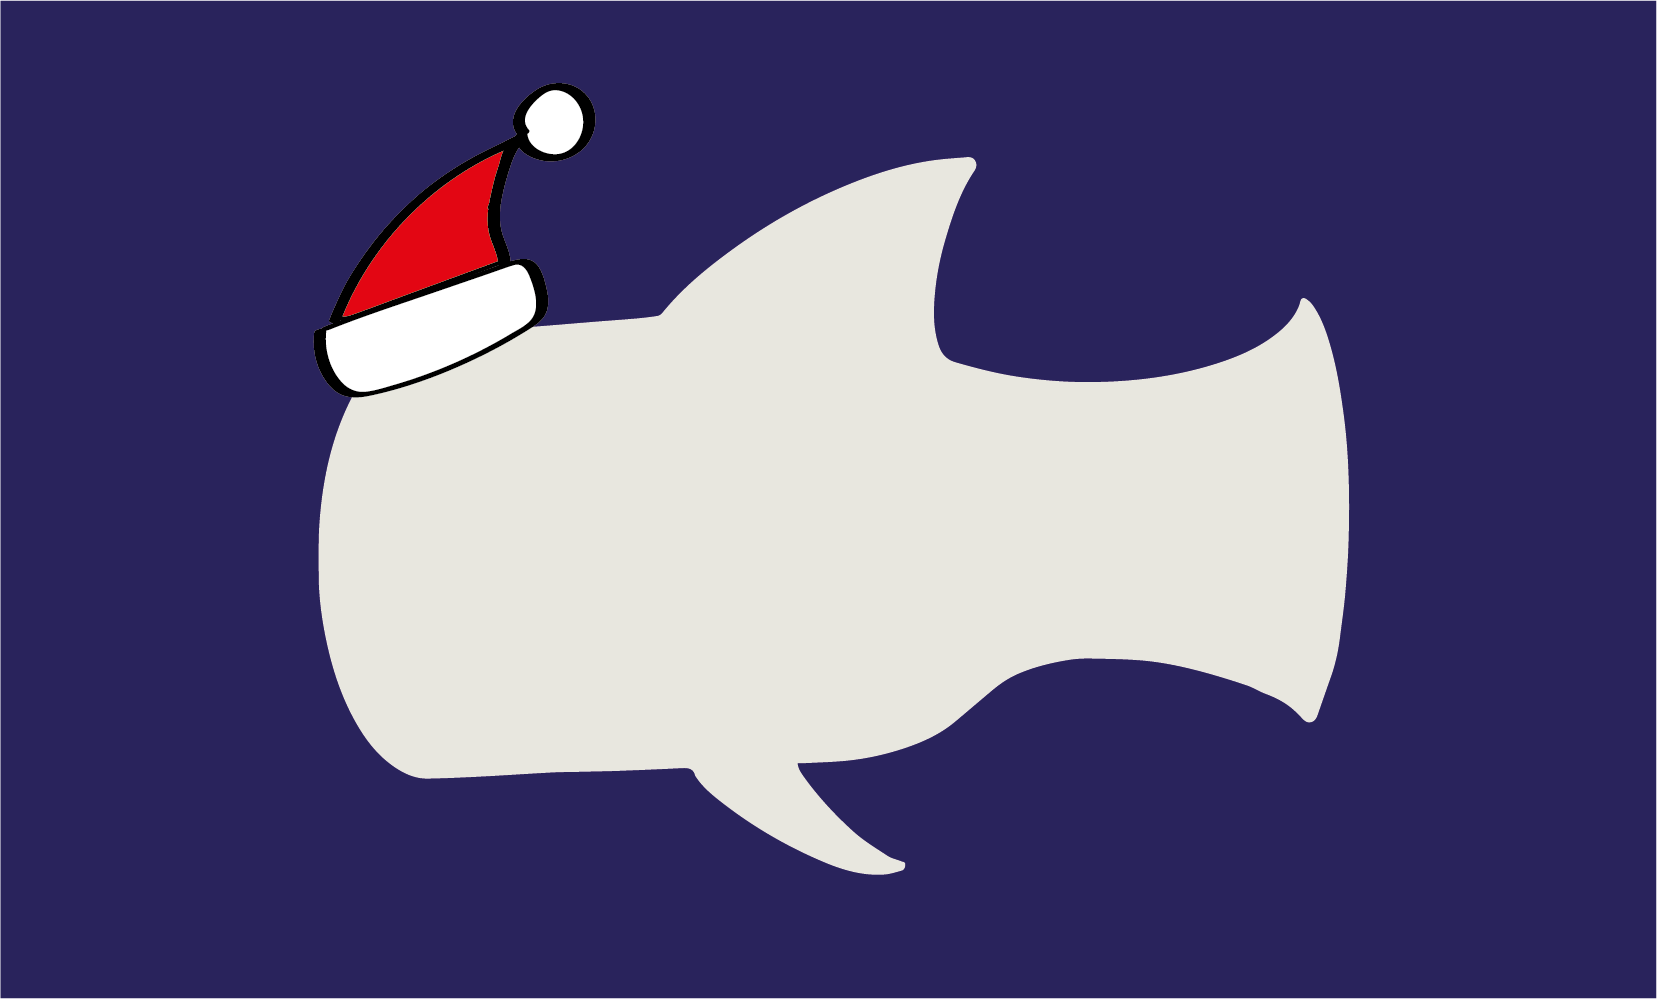 Beerblefish fish logo with Santa hat on